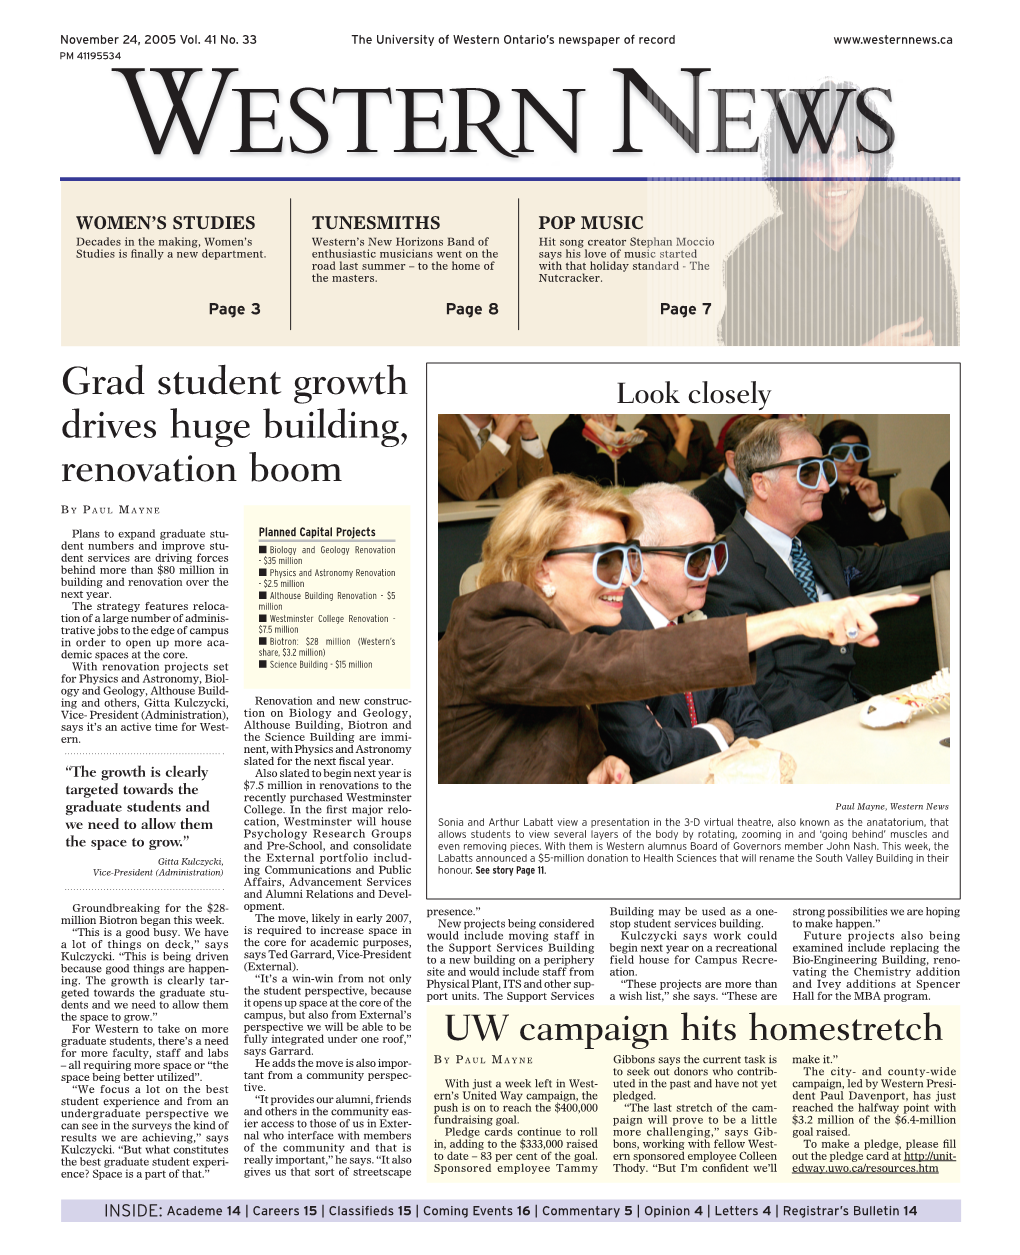 Grad Student Growth Drives Huge Building, Renovation Boom